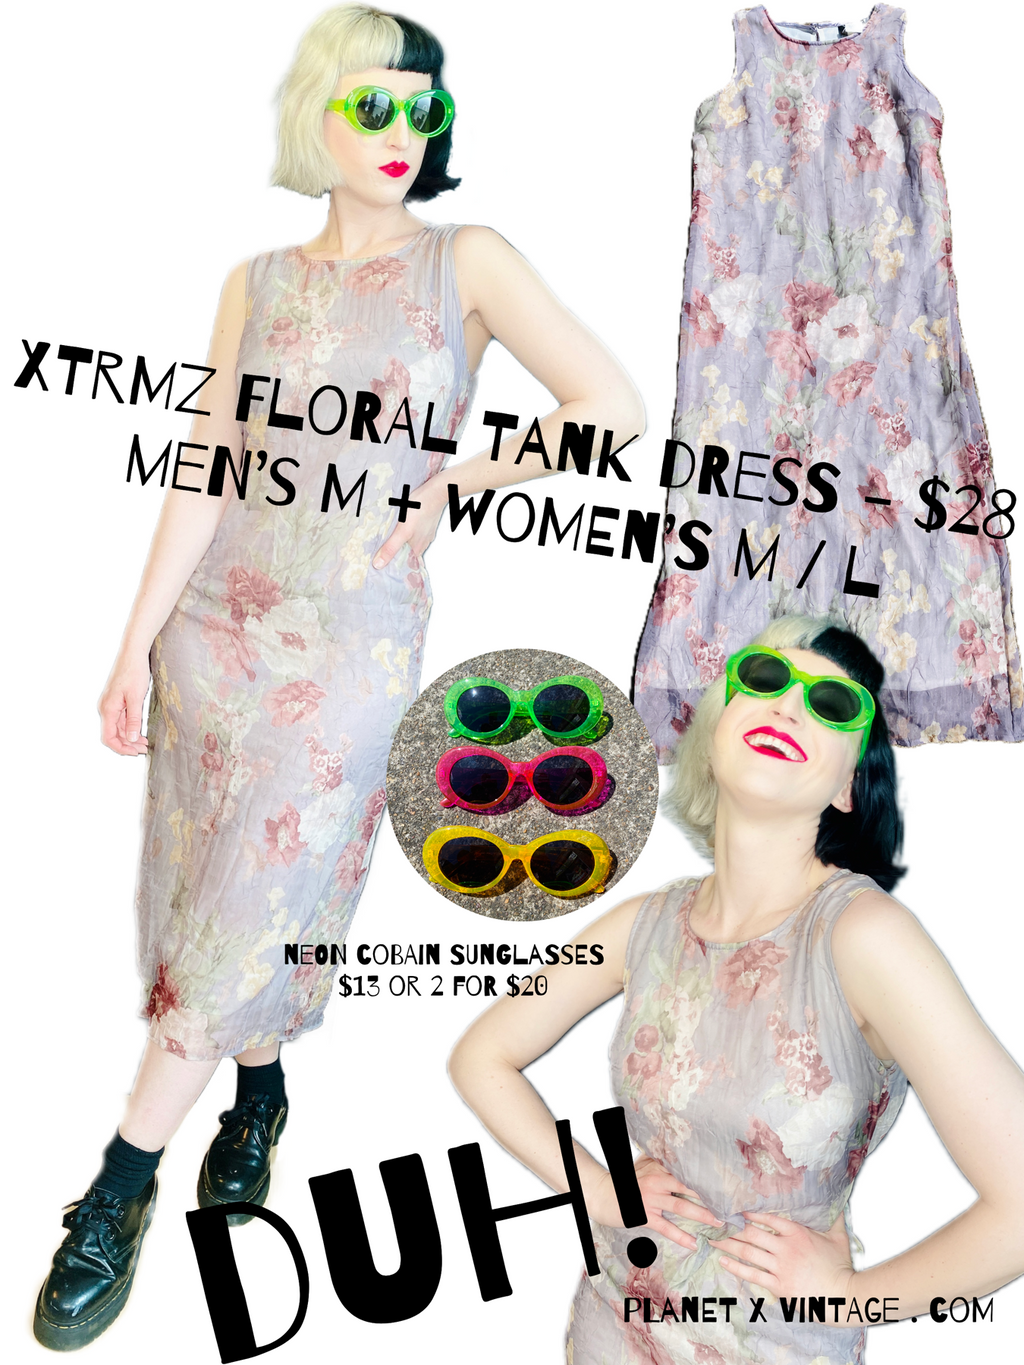 XTRMZ FLORAL TANK DRESS